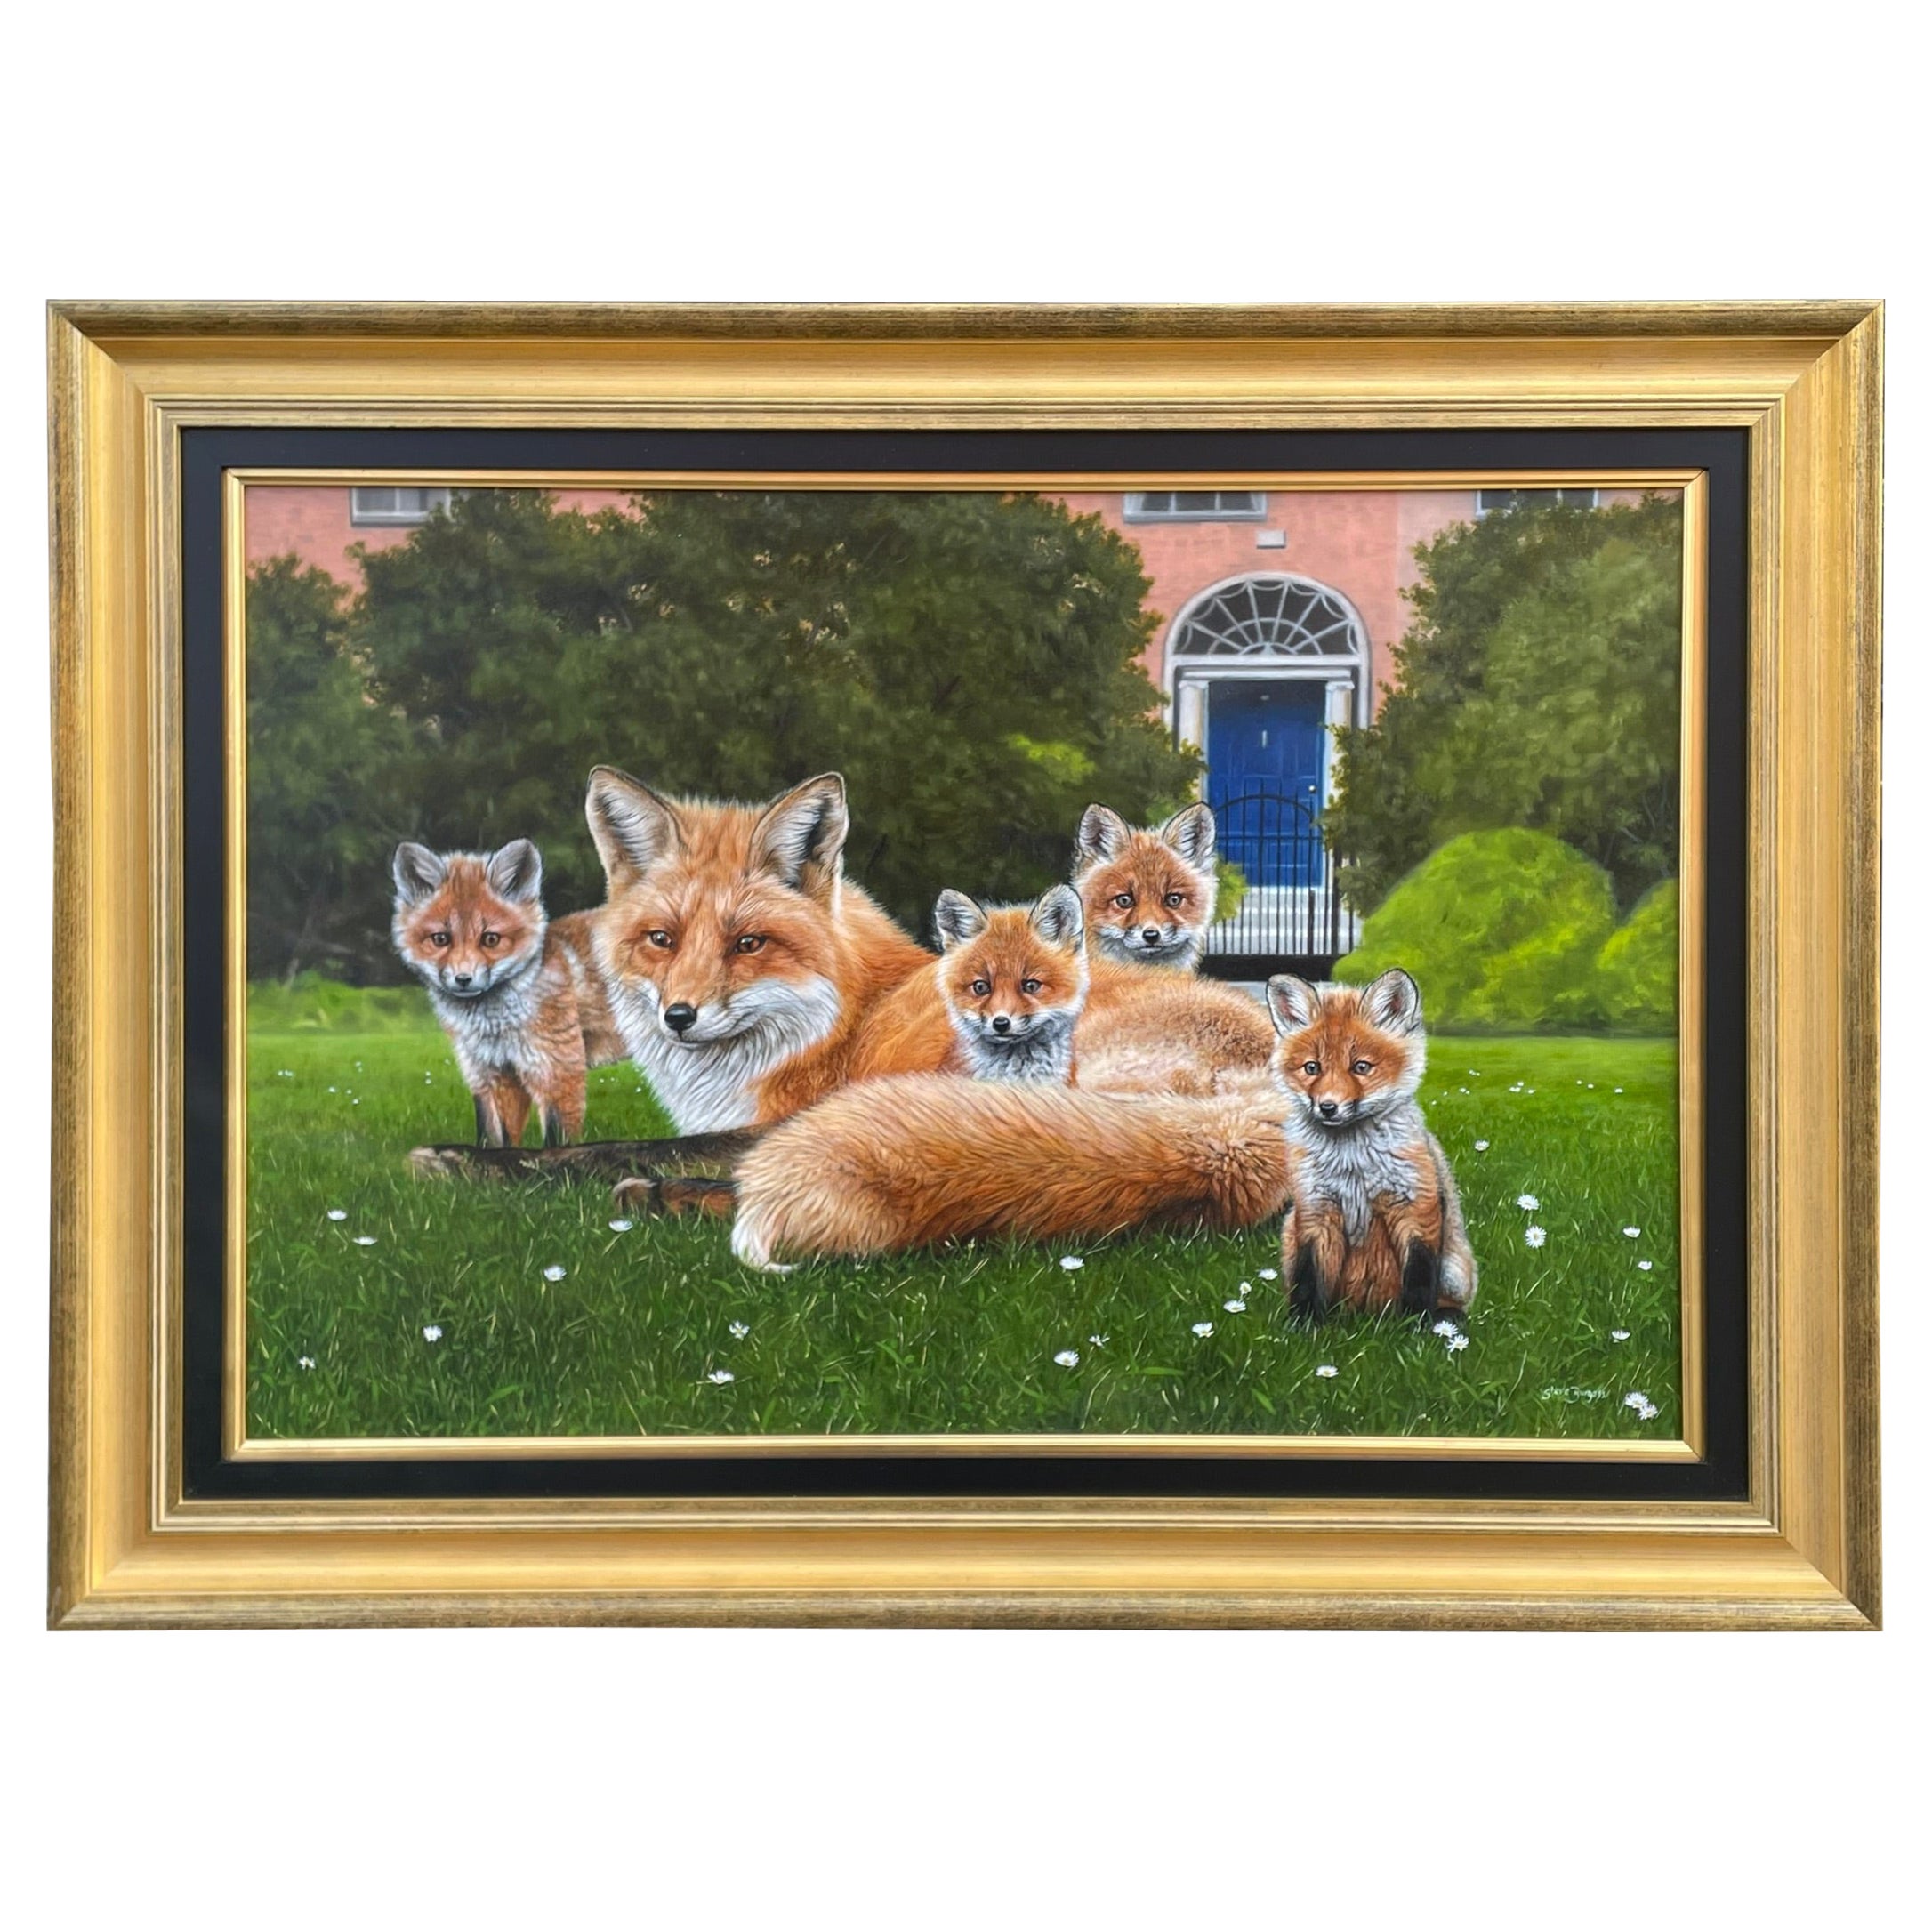 Steve Burgess - Irish Painting Fitzwilliam Square Dublin Ireland Foxes For Sale